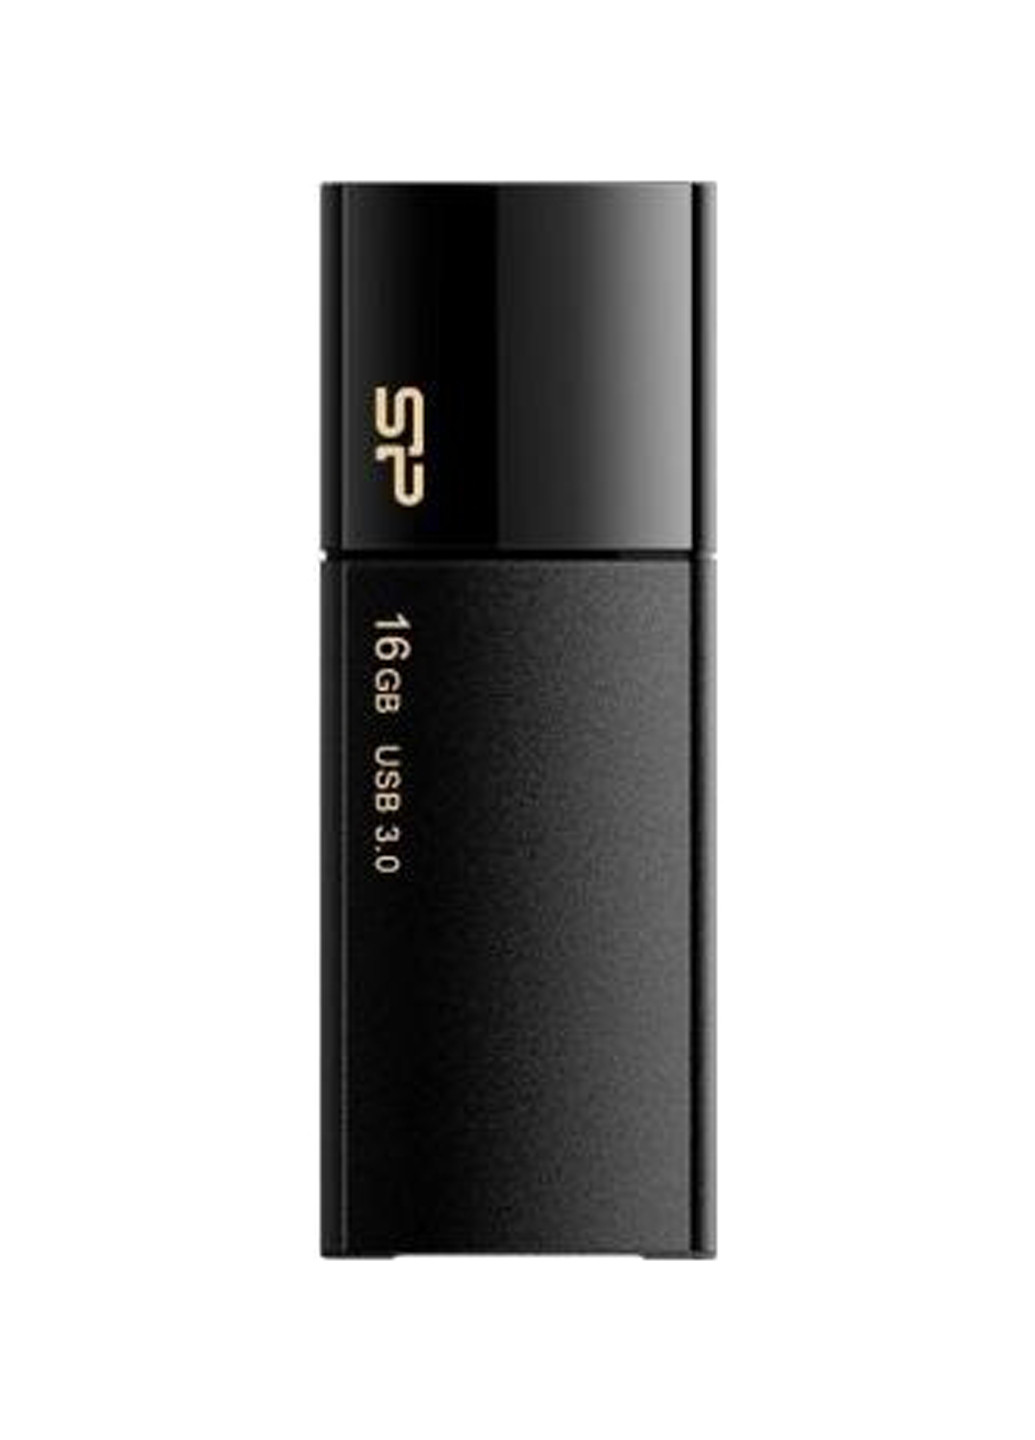 Флеш память USB Blaze B05 16GB Black (SP016GBUF3B05V1K) Silicon Power флеш память usb silicon power blaze b05 16gb black (sp016gbuf3b05v1k) (132007712)